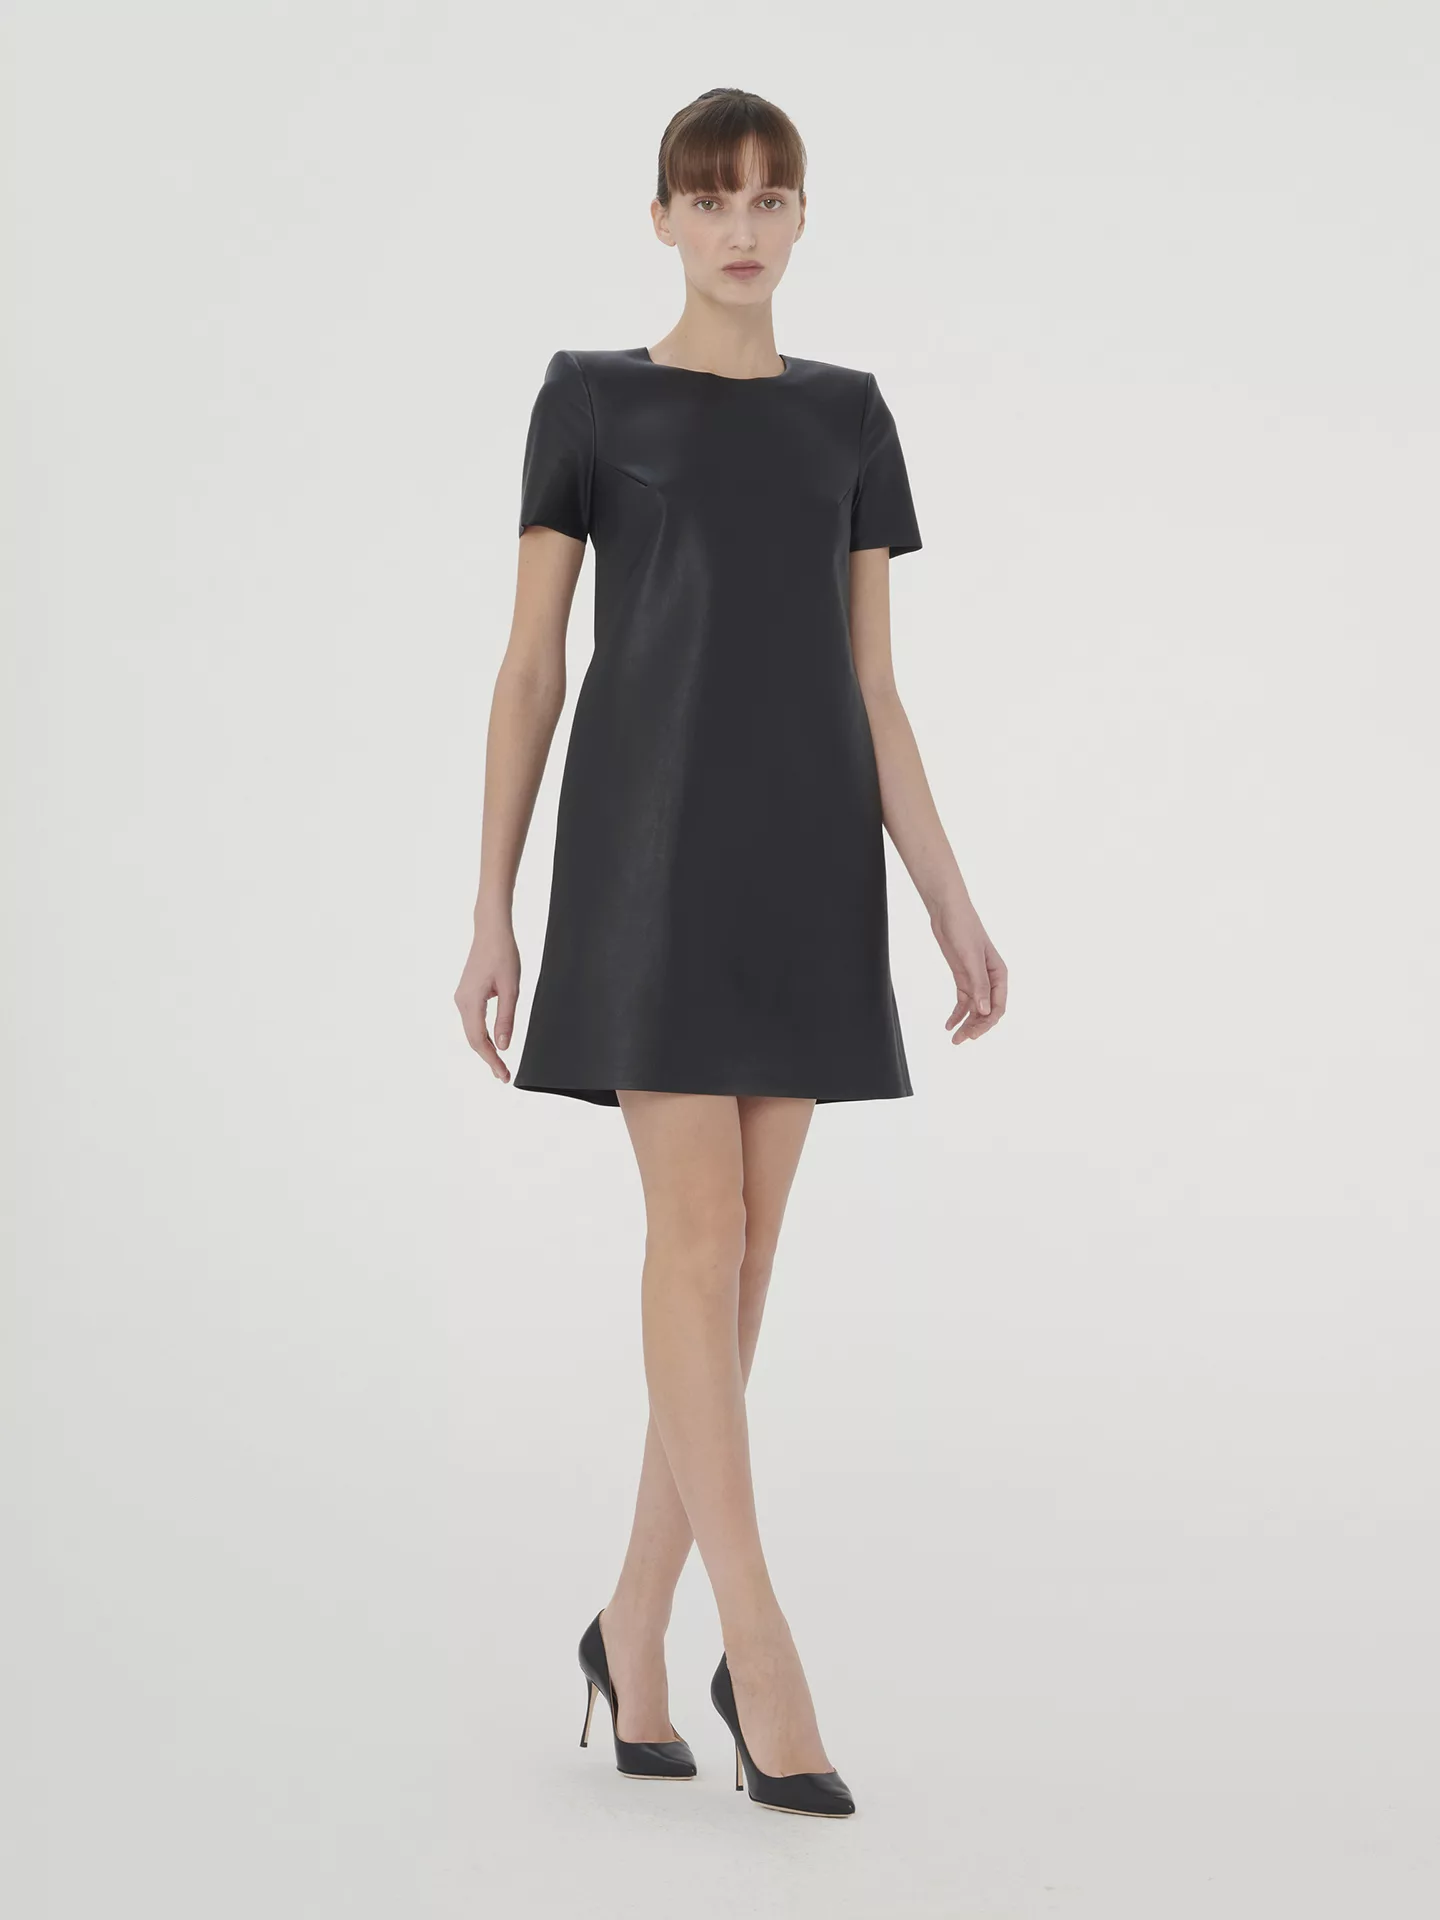 Wolford - Vegan Dress, Frau, black, Größe: 38 günstig online kaufen